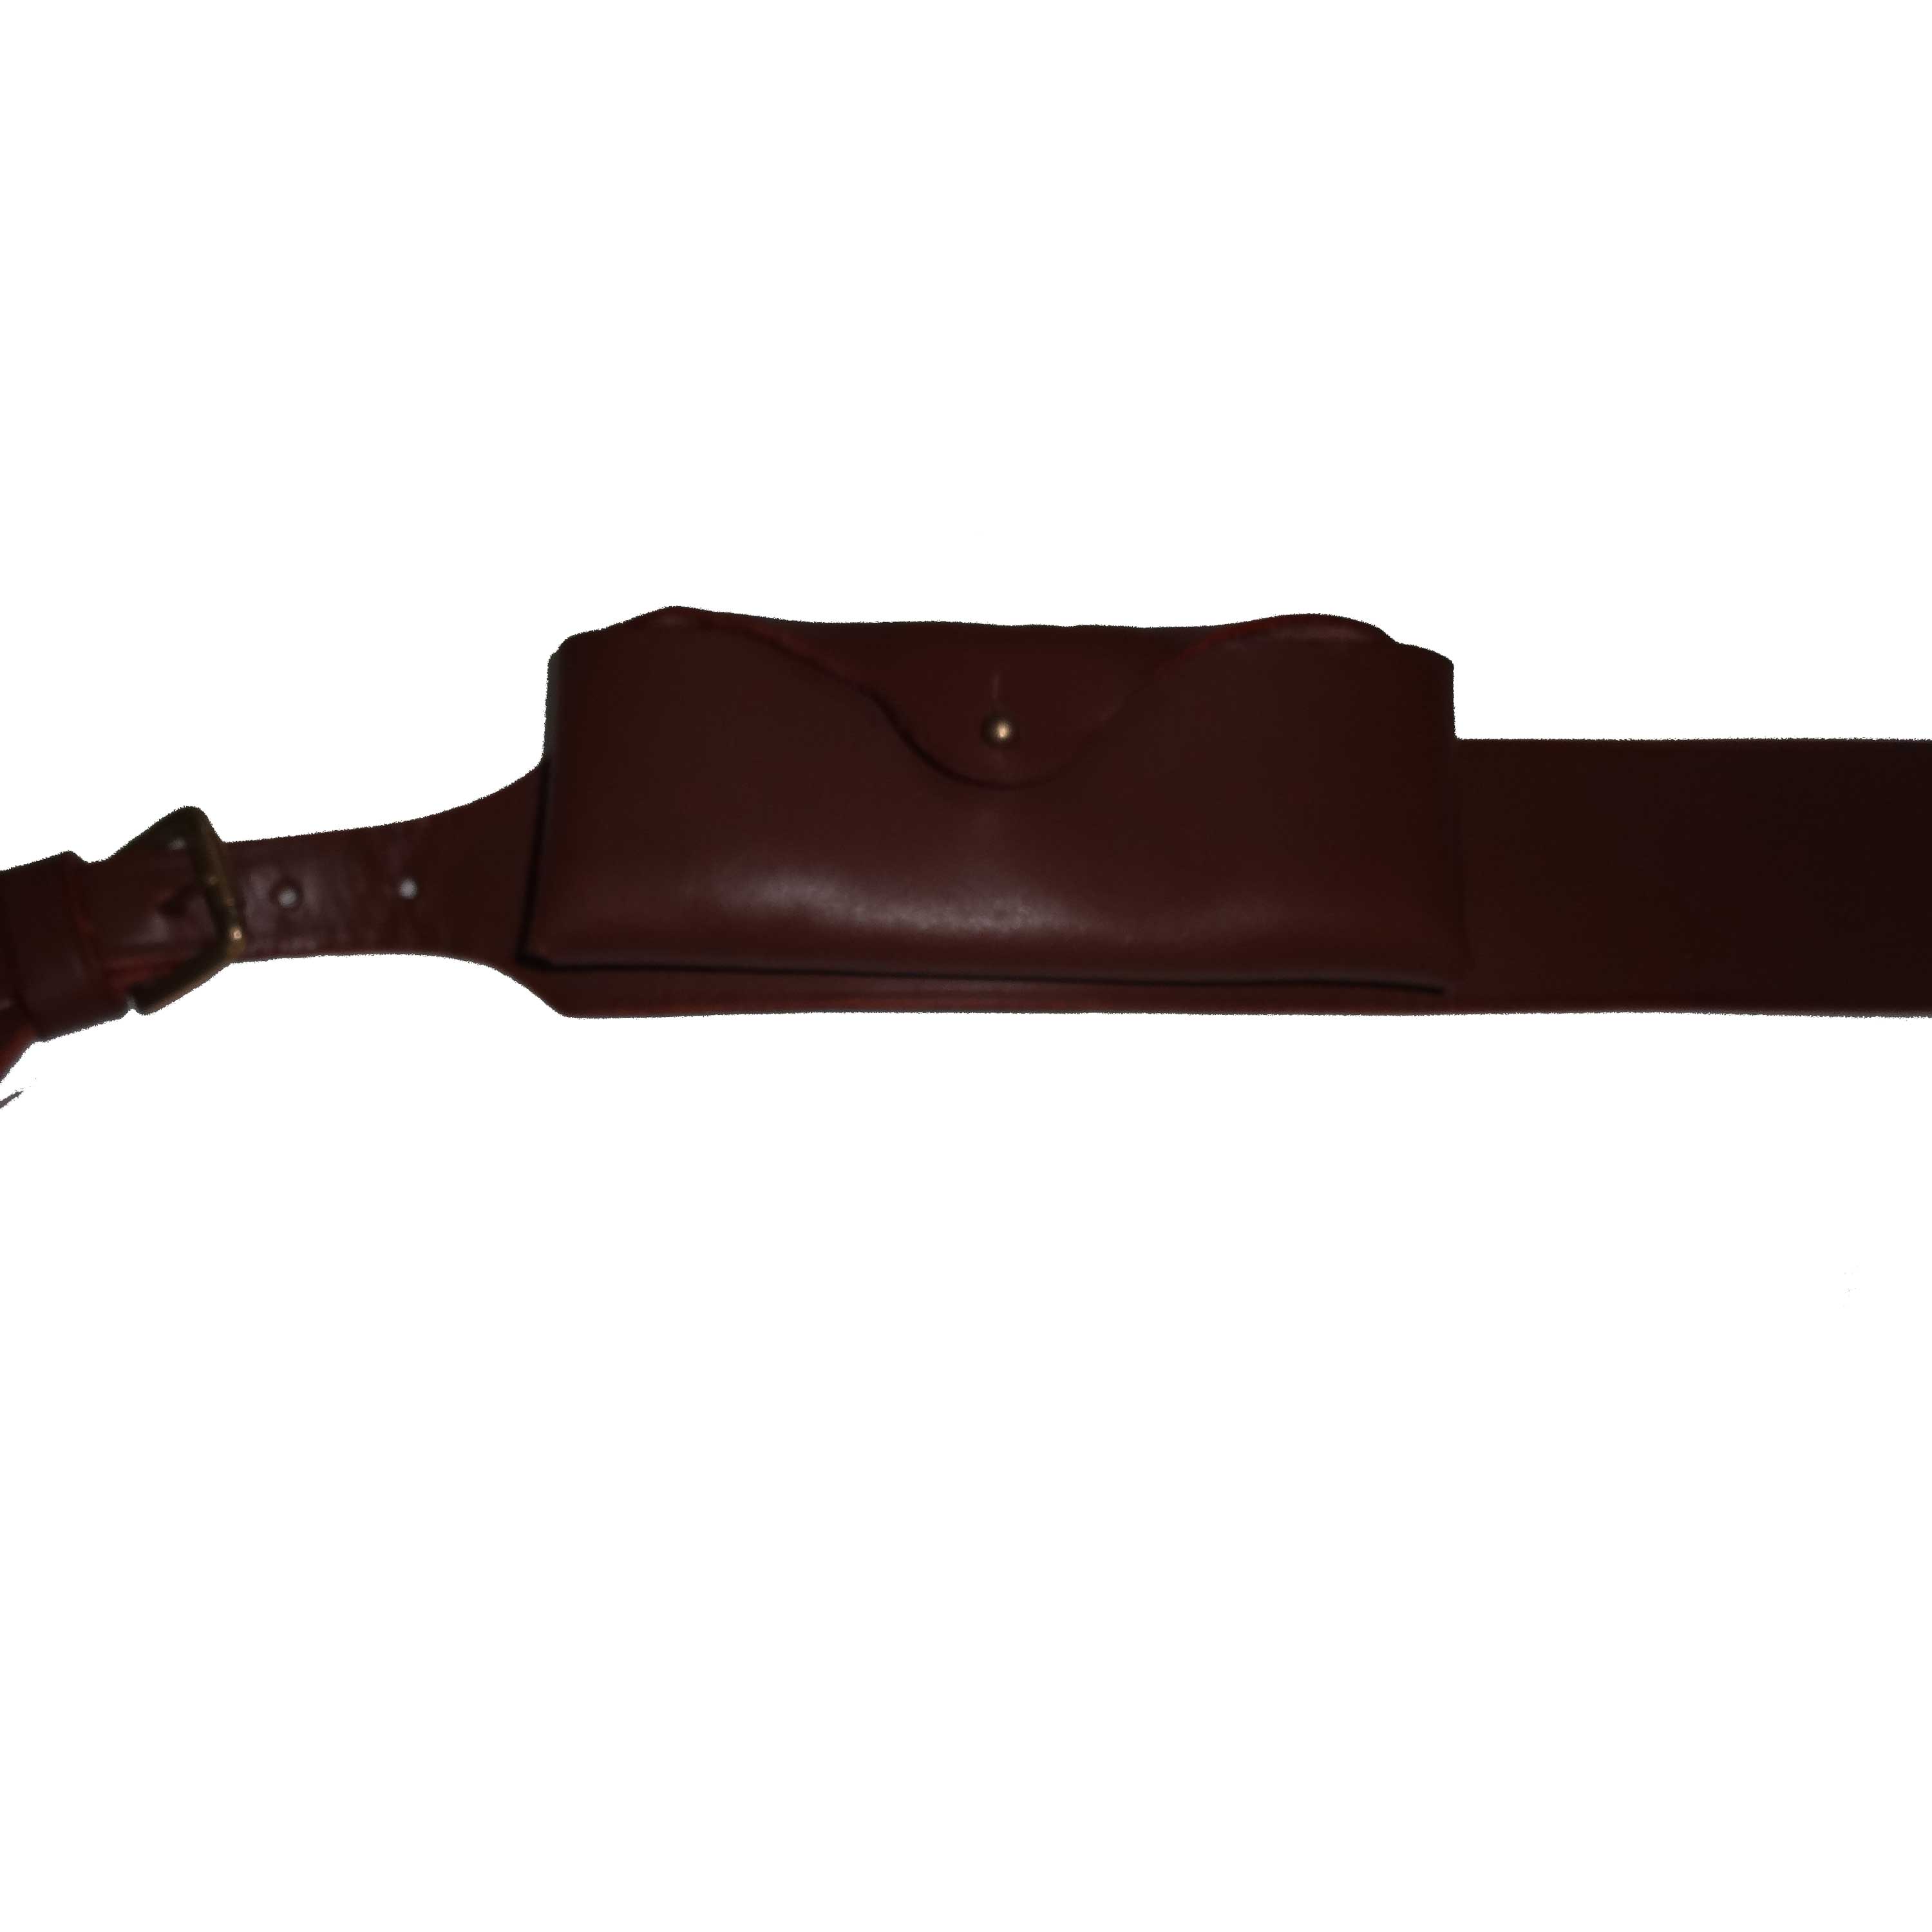 Details about   German Mauser C96 Bolo M1921 Leather Pistol Holster & Bandolier Belt D-Brown Ol5 